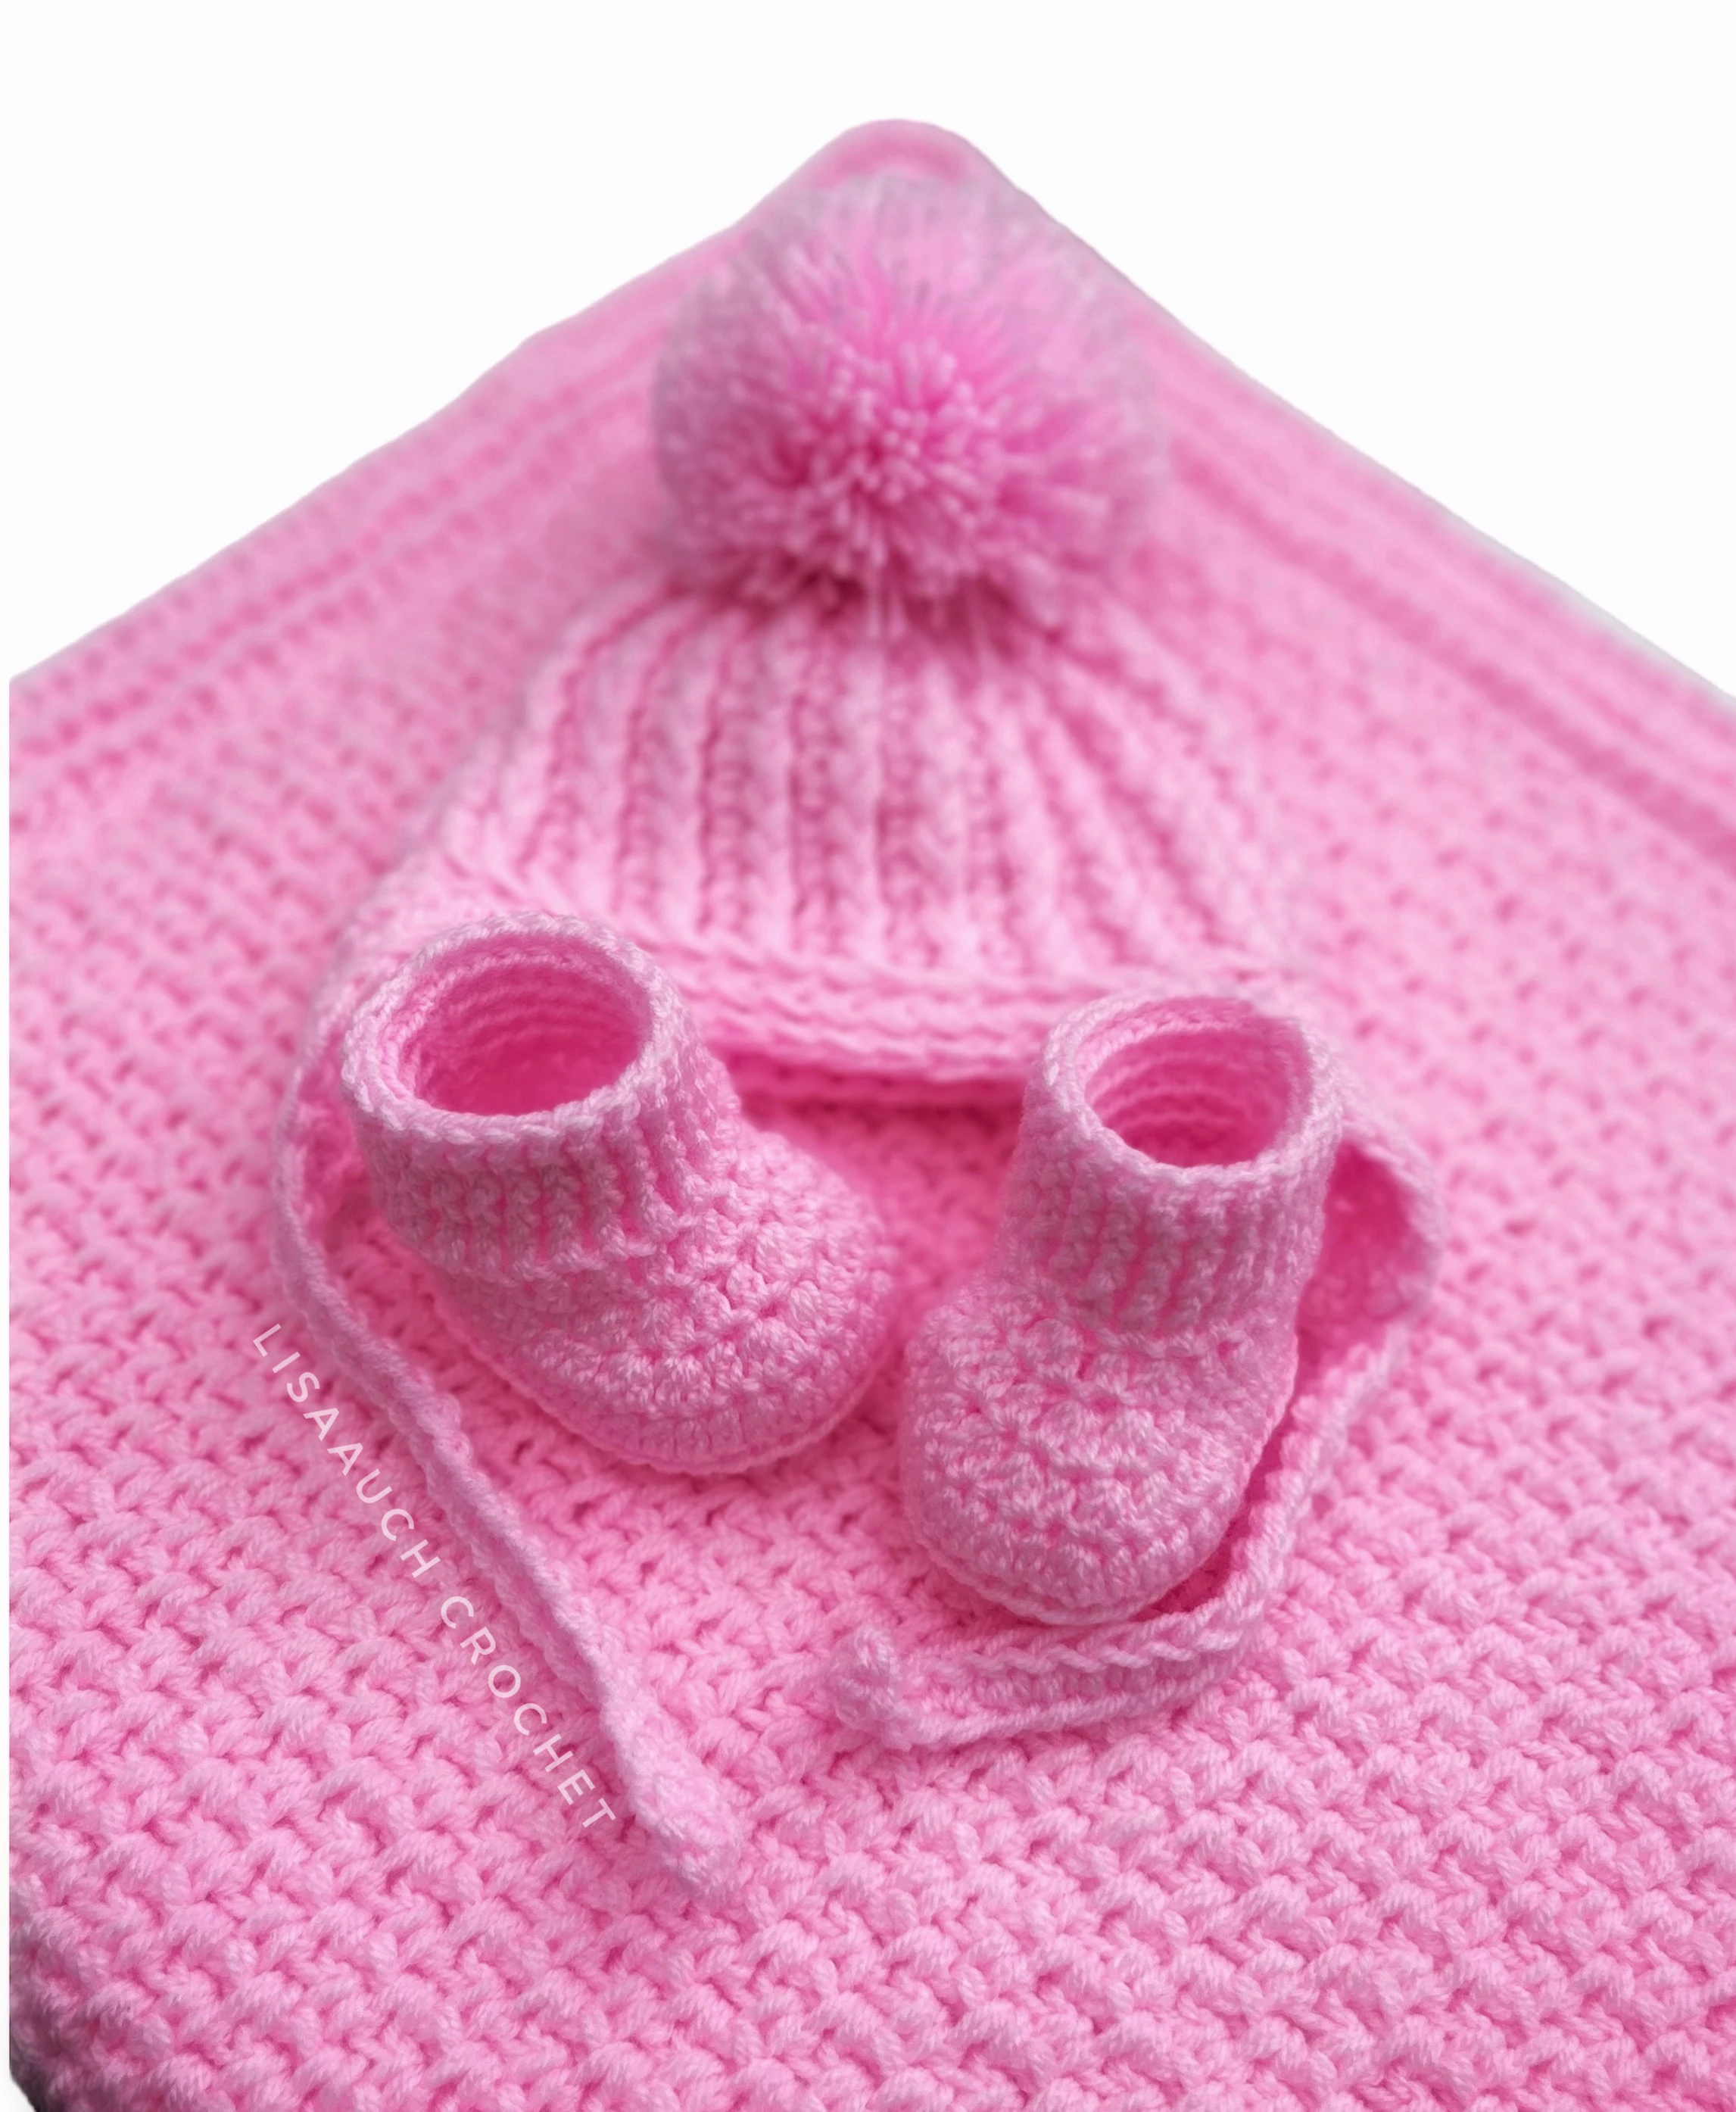 crochet baby set patterns free - baby hat, booties, blanket crochet patterns free